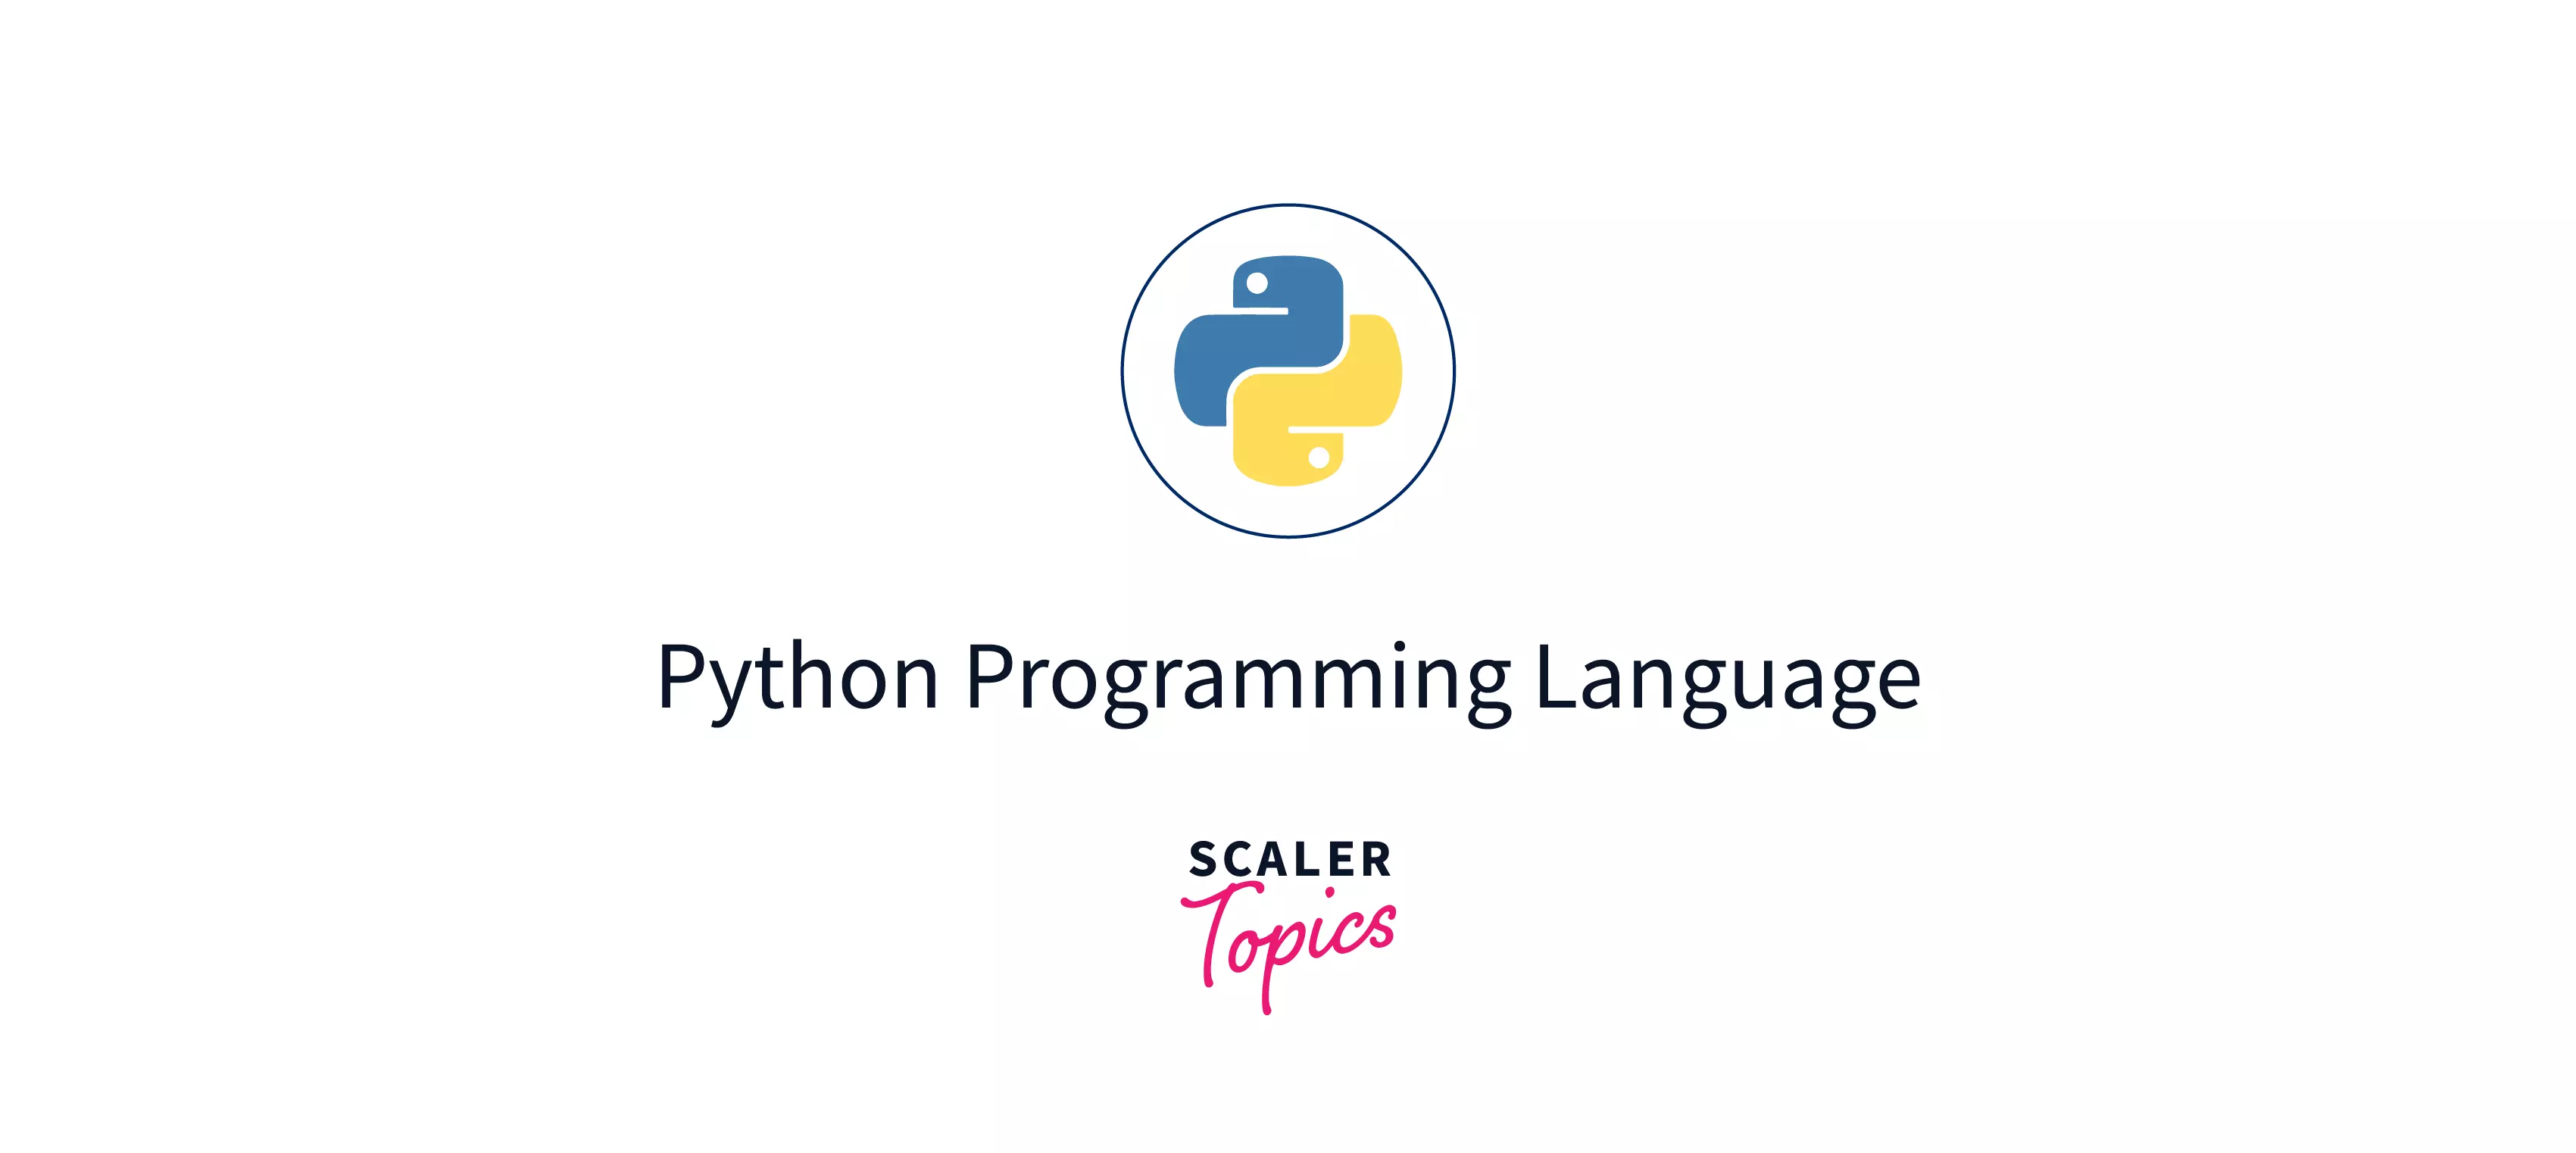 Importance of Python